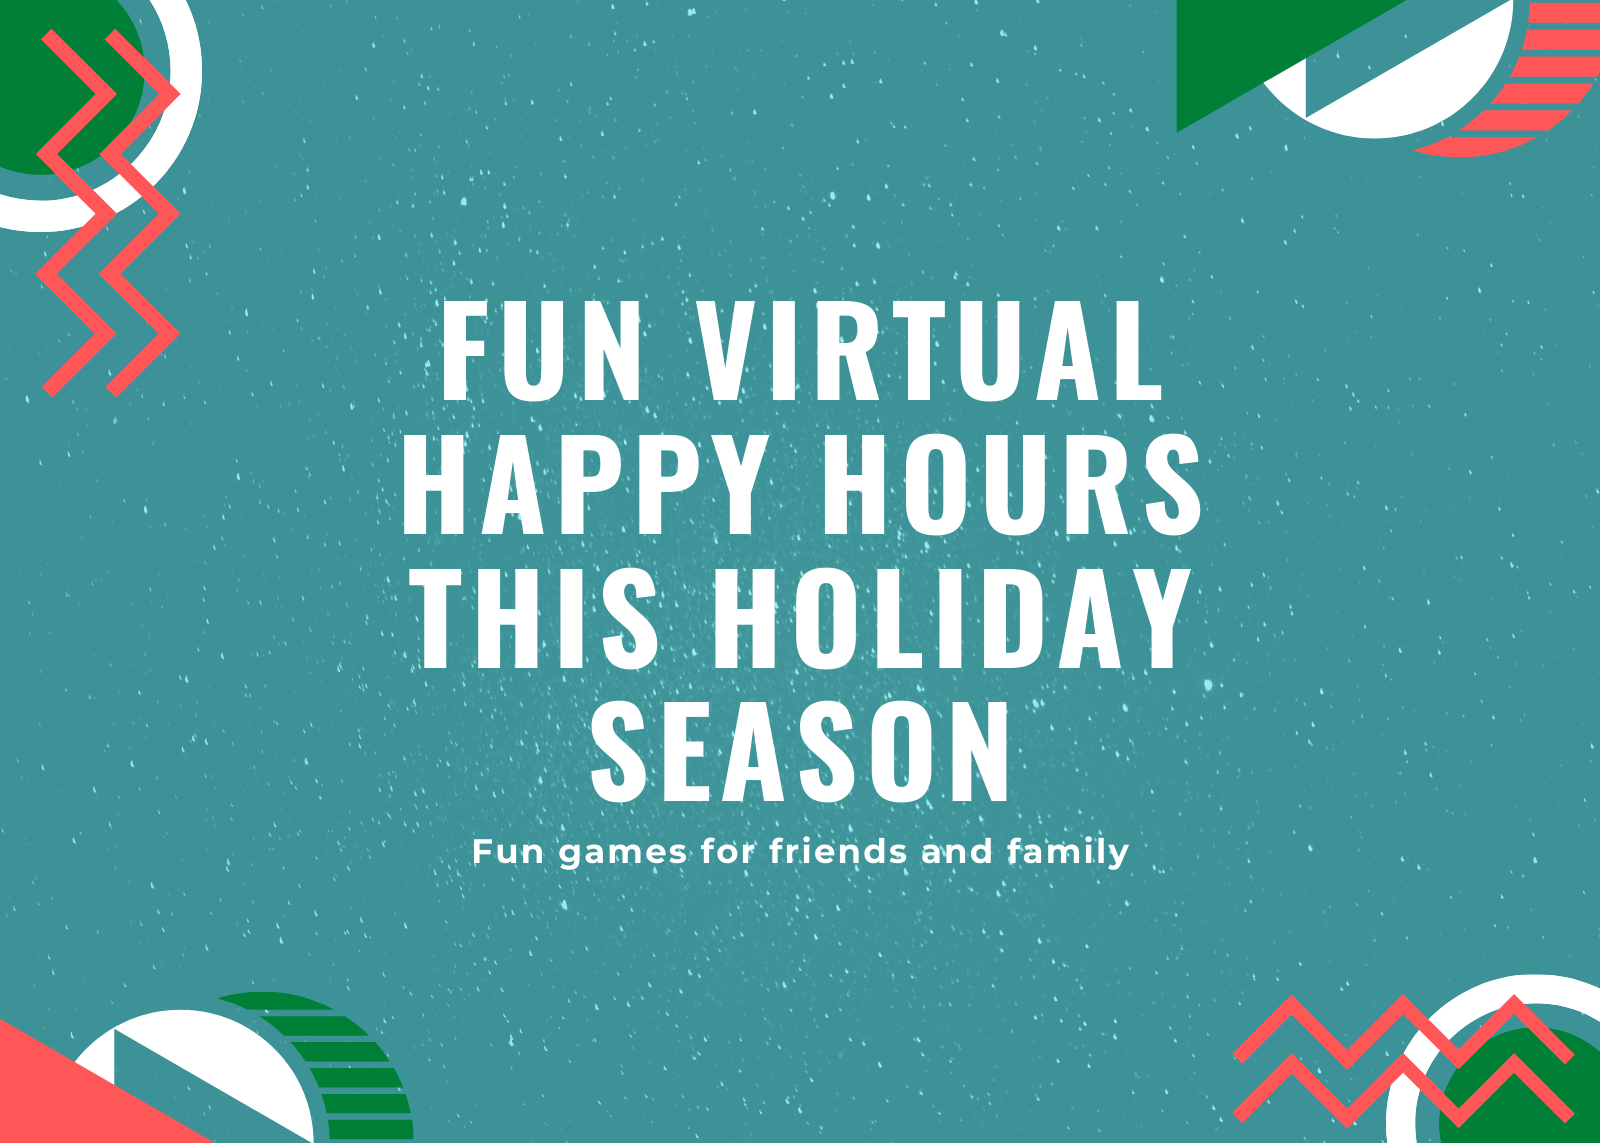 Fun Virtual Happy Hours This Holiday Season